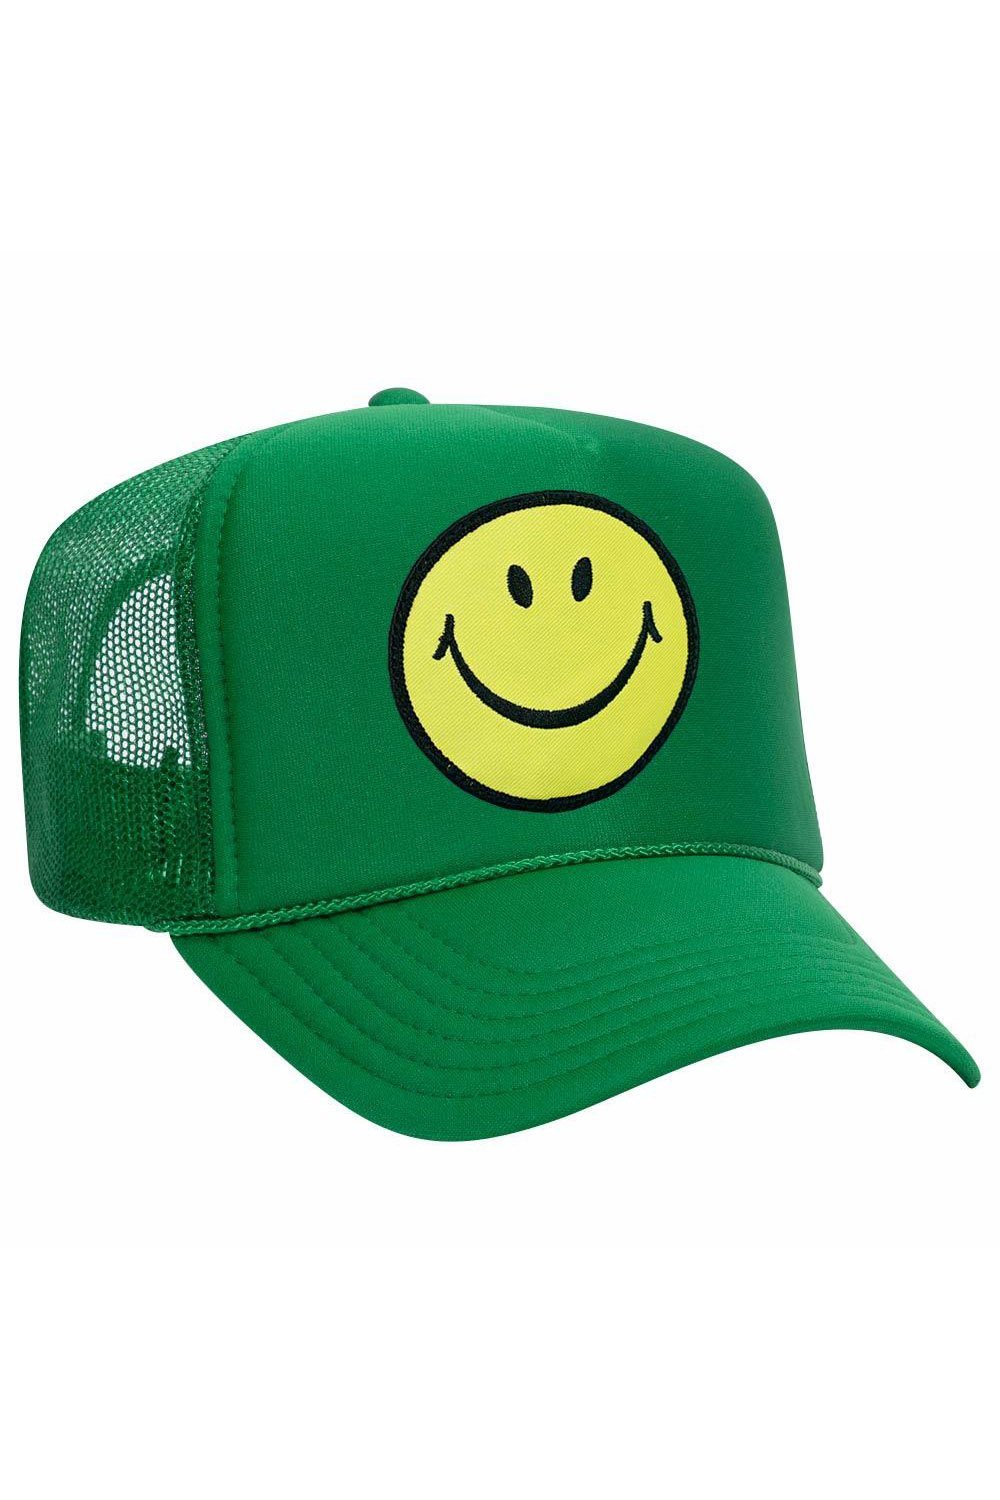 SMILEY VINTAGE TRUCKER HAT HATS Aviator Nation OS KELLY GREEN 